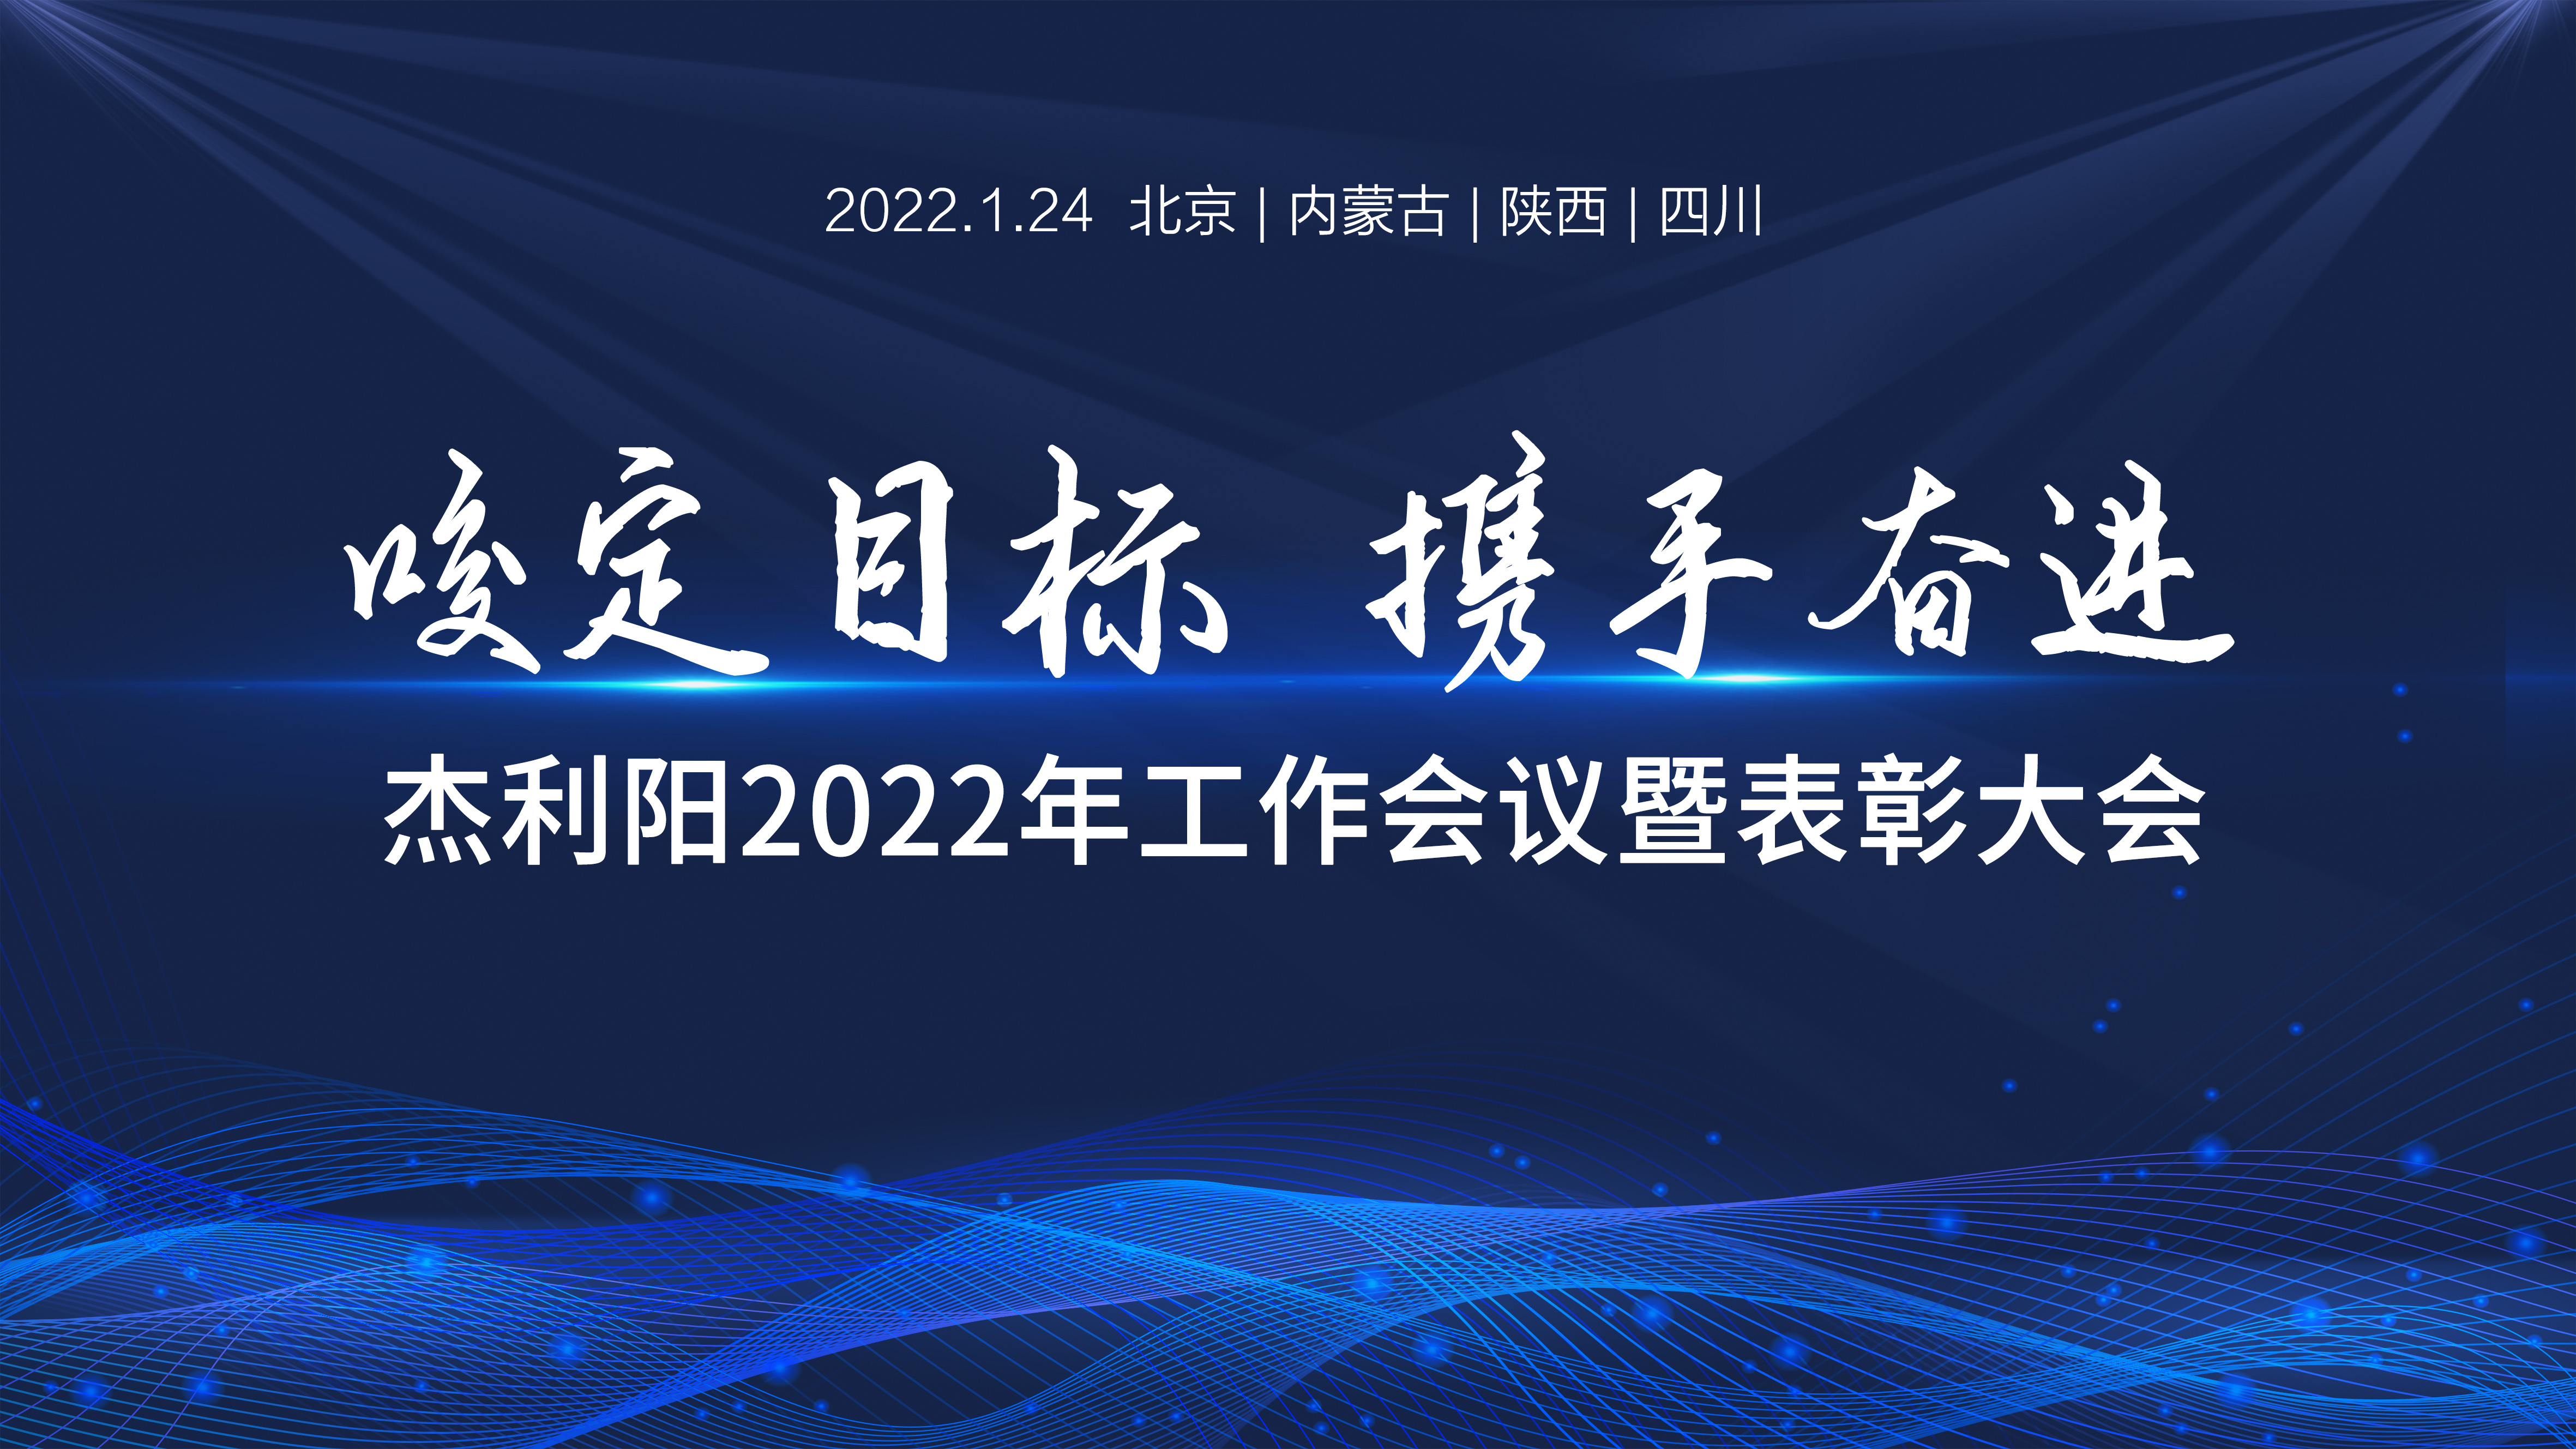 <strong>杰利阳2022年工作会议暨表彰大会在线召开！</strong>